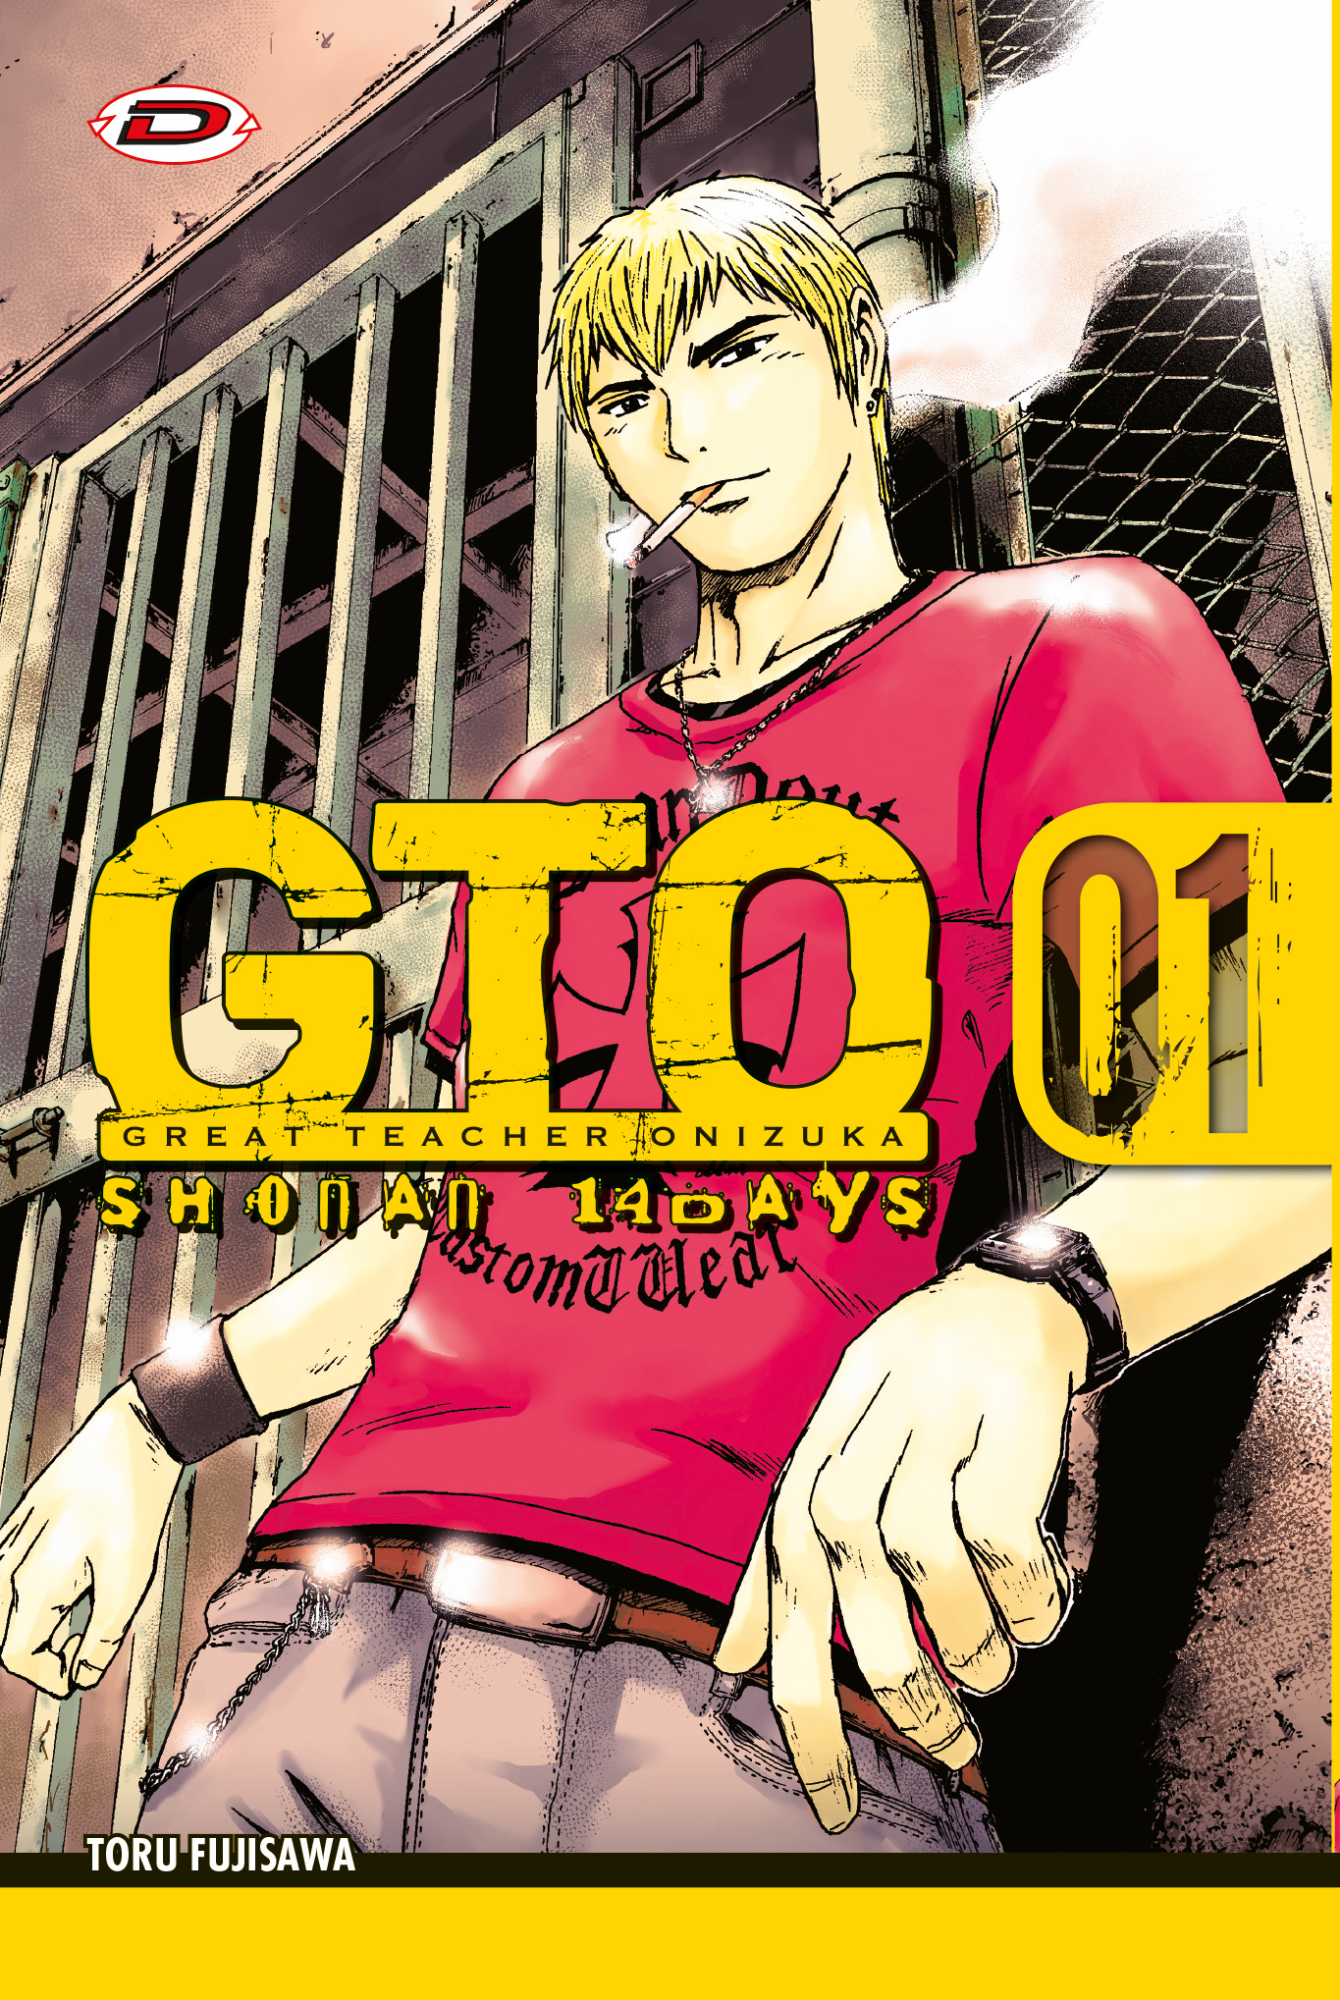 G.T.O. - Shonan 14 Days #01